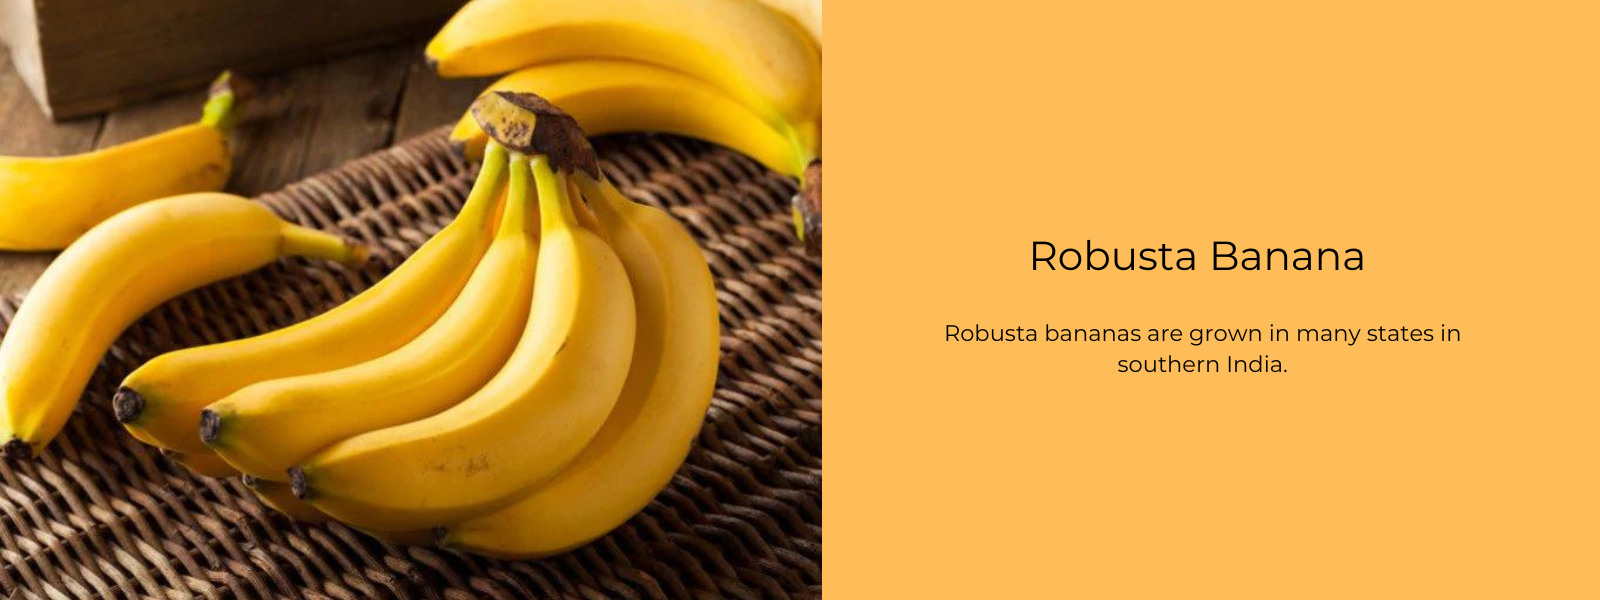 Robusta Banana - Health Benefits, Uses and Important Facts